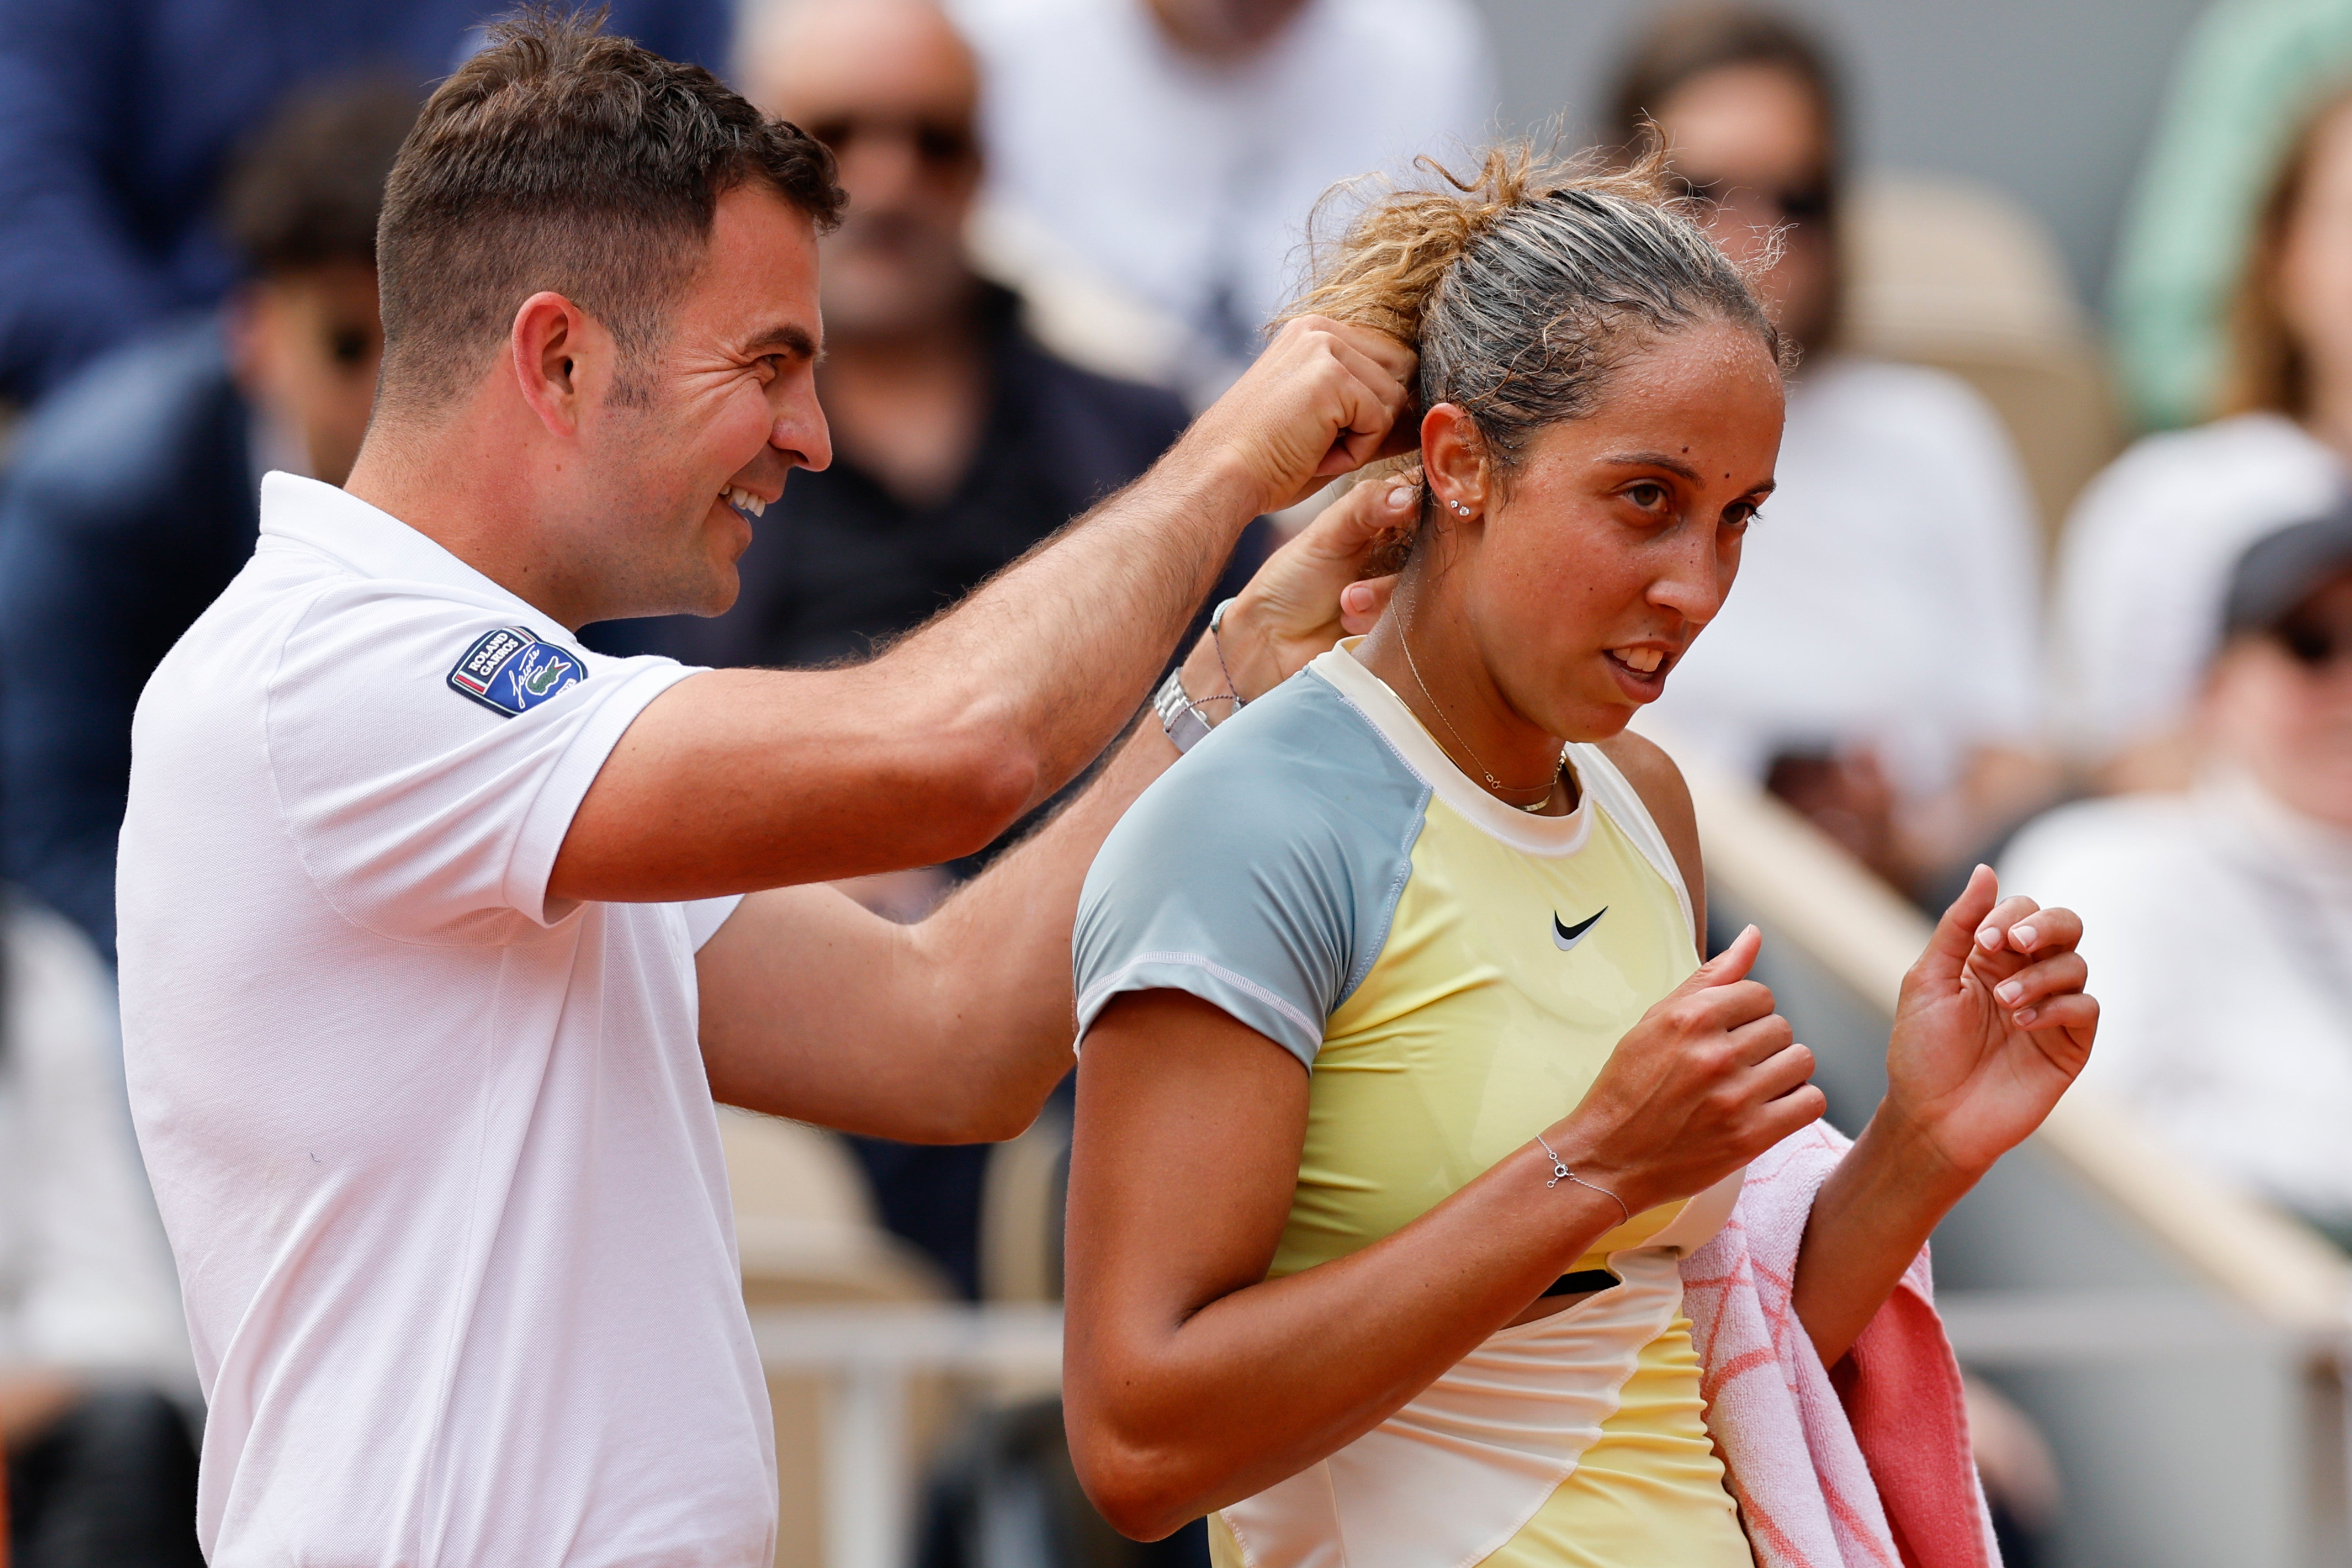 Chair umpire Jaume Campistol helps Madison Keys untangle her necklace (Jean-Francois Badias/AP)